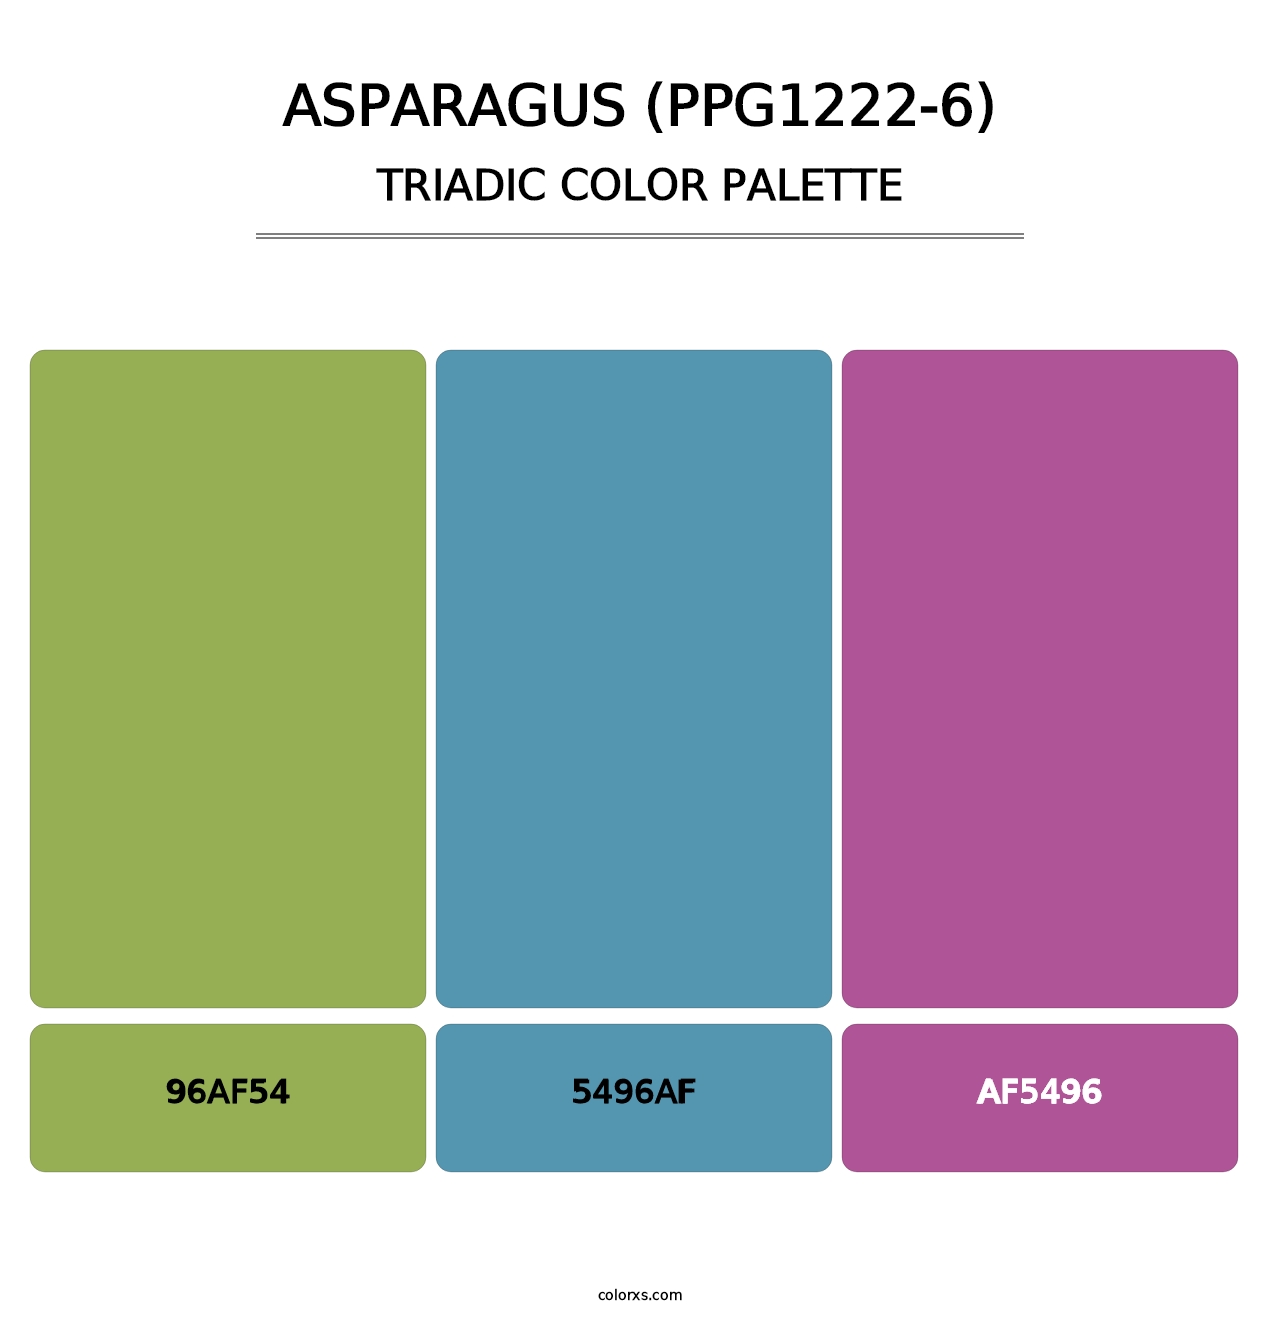 Asparagus (PPG1222-6) - Triadic Color Palette